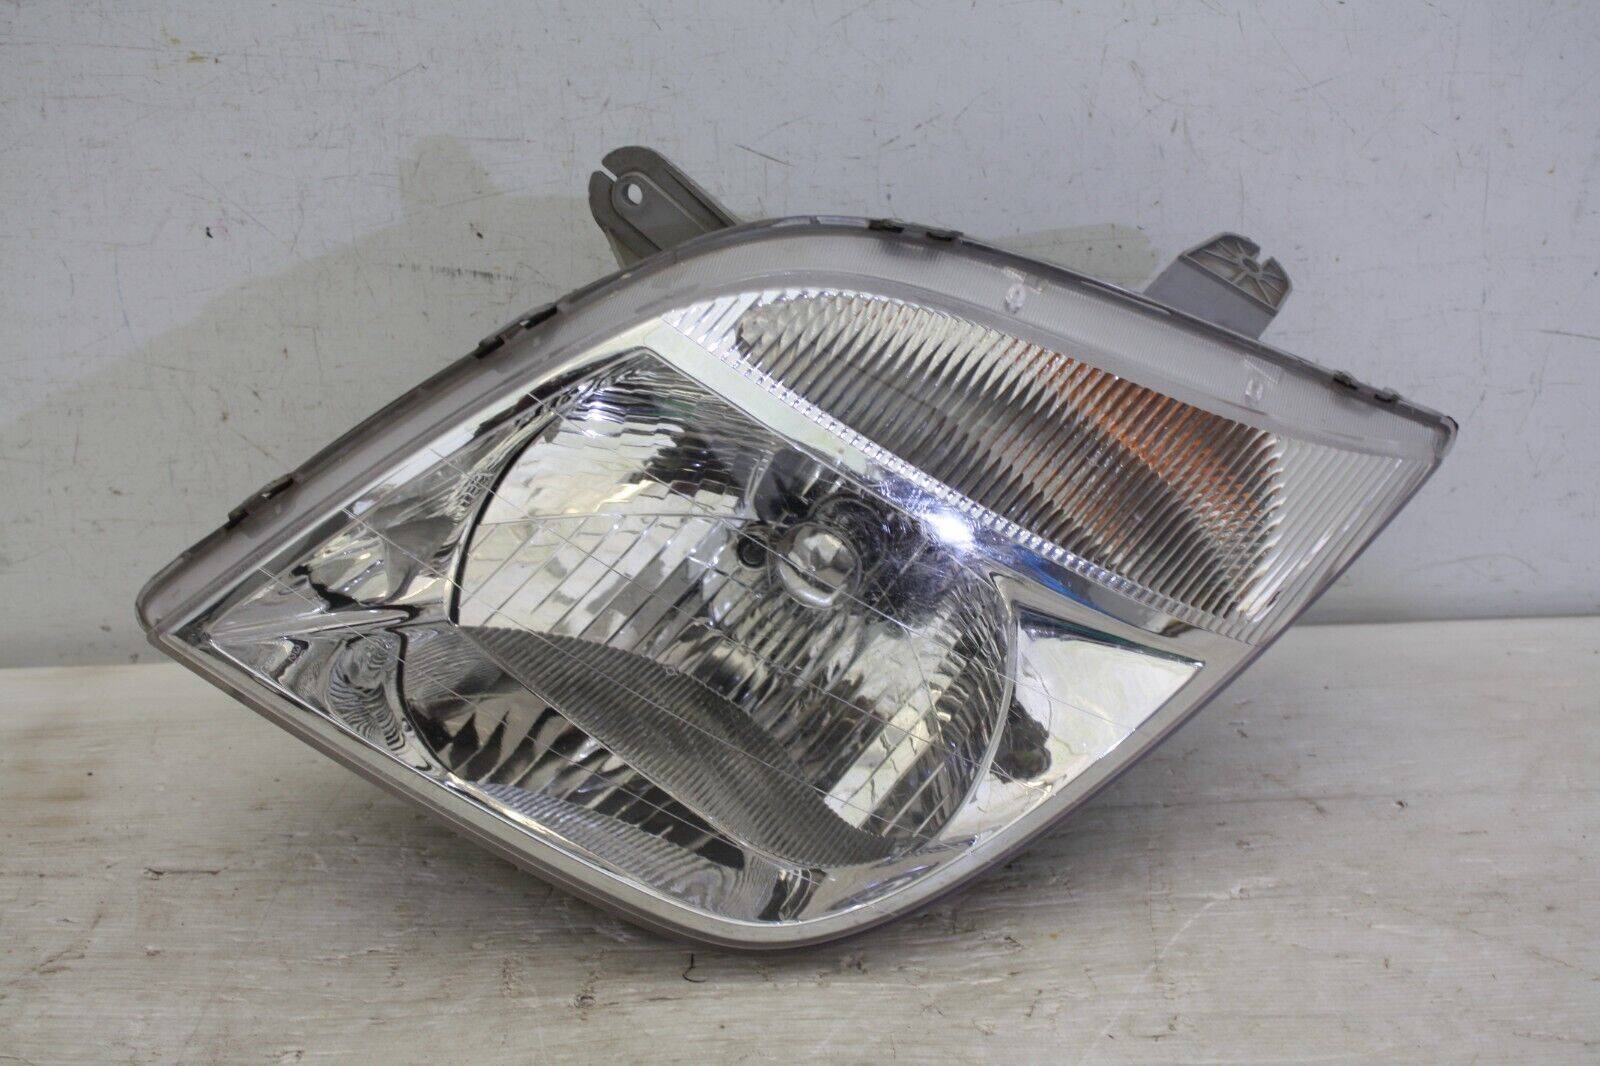 LDV Maxus Left Side Headlight 2004 TO 2009 0301 001239 Genuine 176139530677